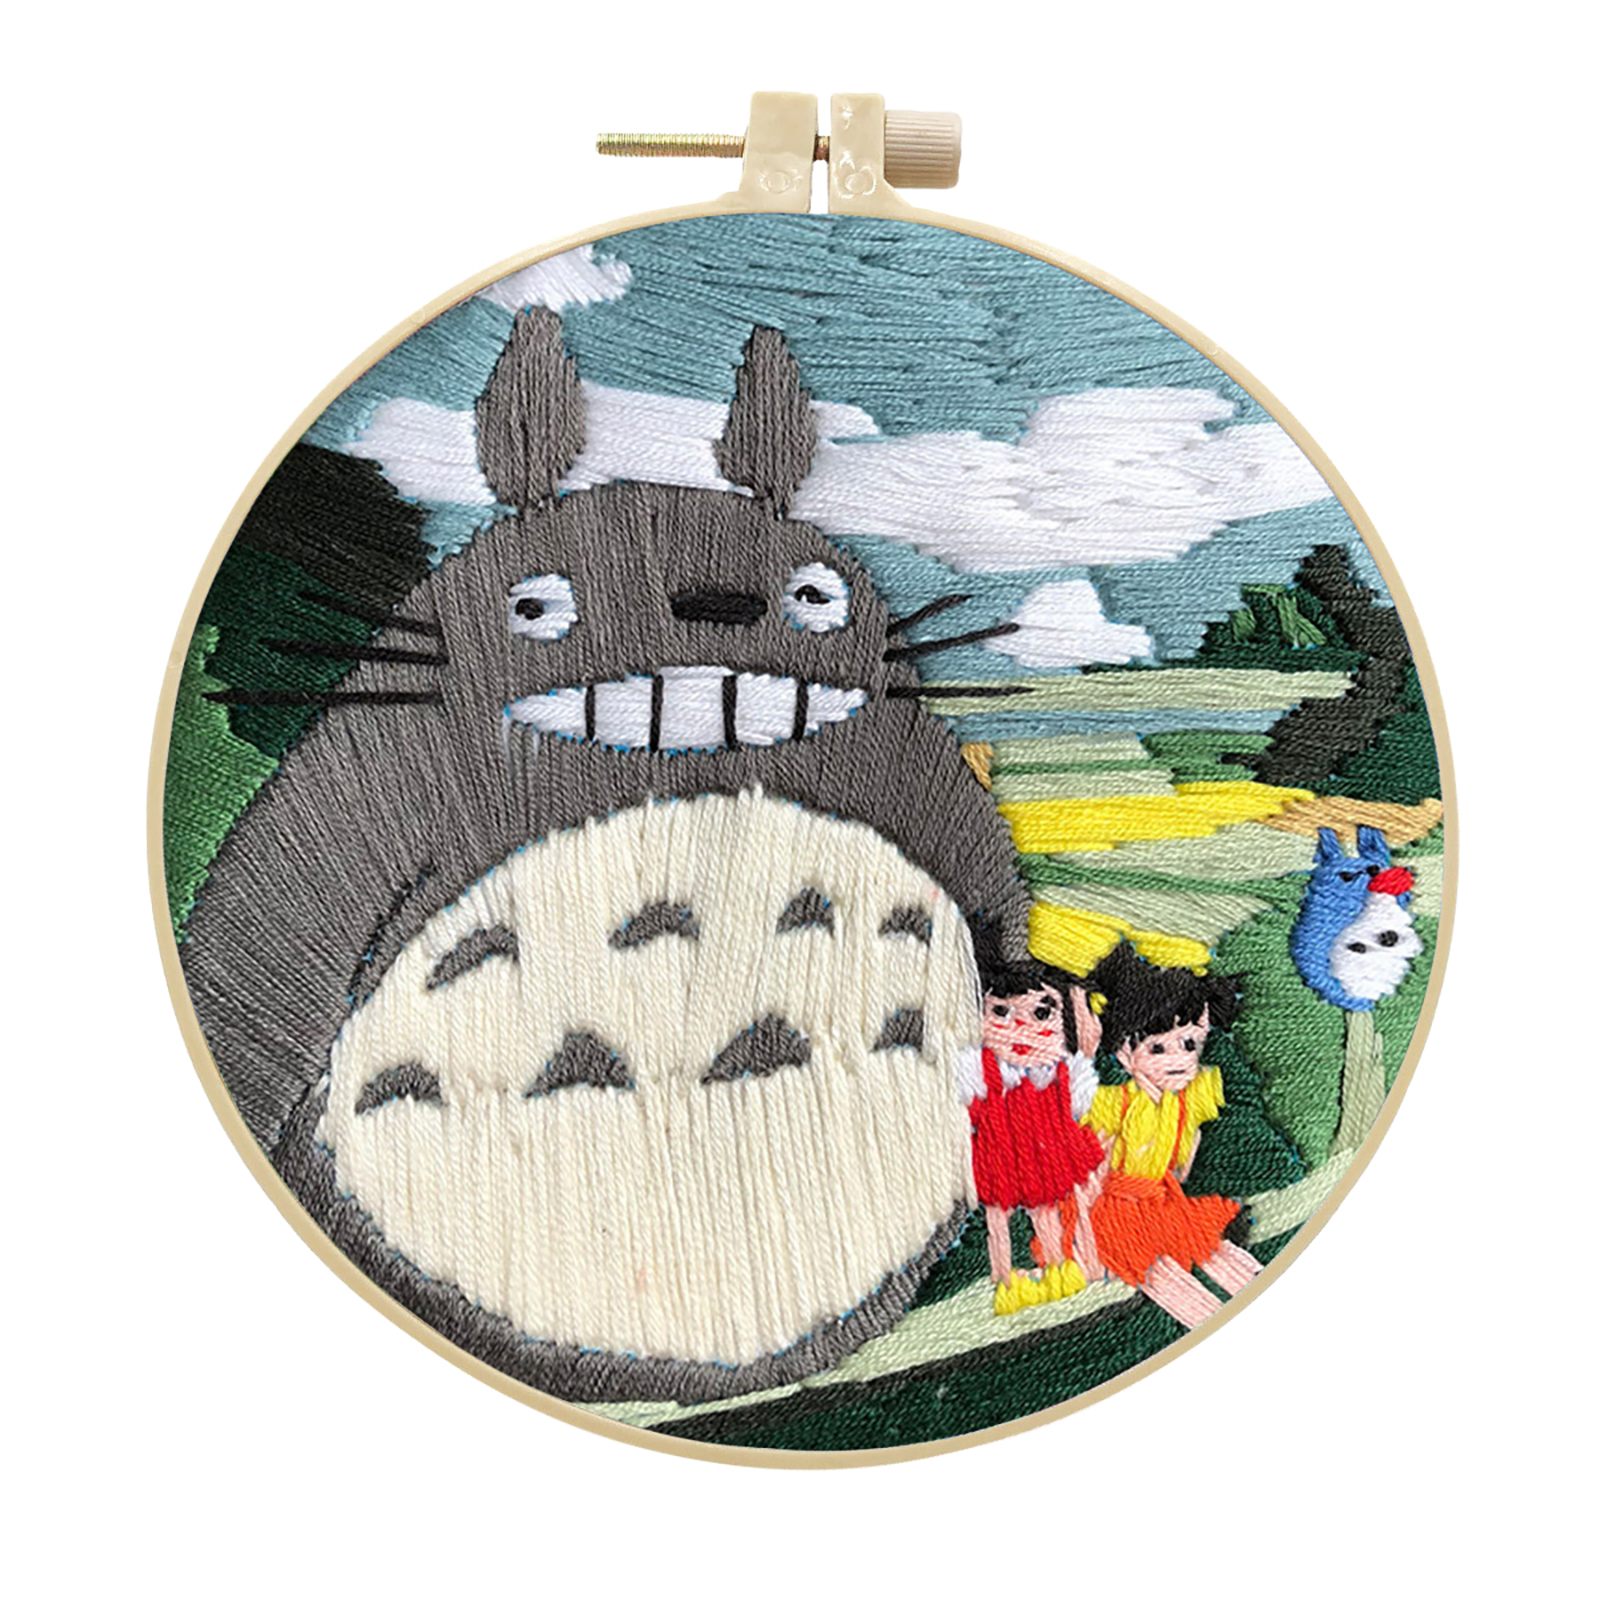 Handmade Embroidery Kit Cross stitch kit for Adult Beginner - Hayao Miyazaki Totoro Pattern